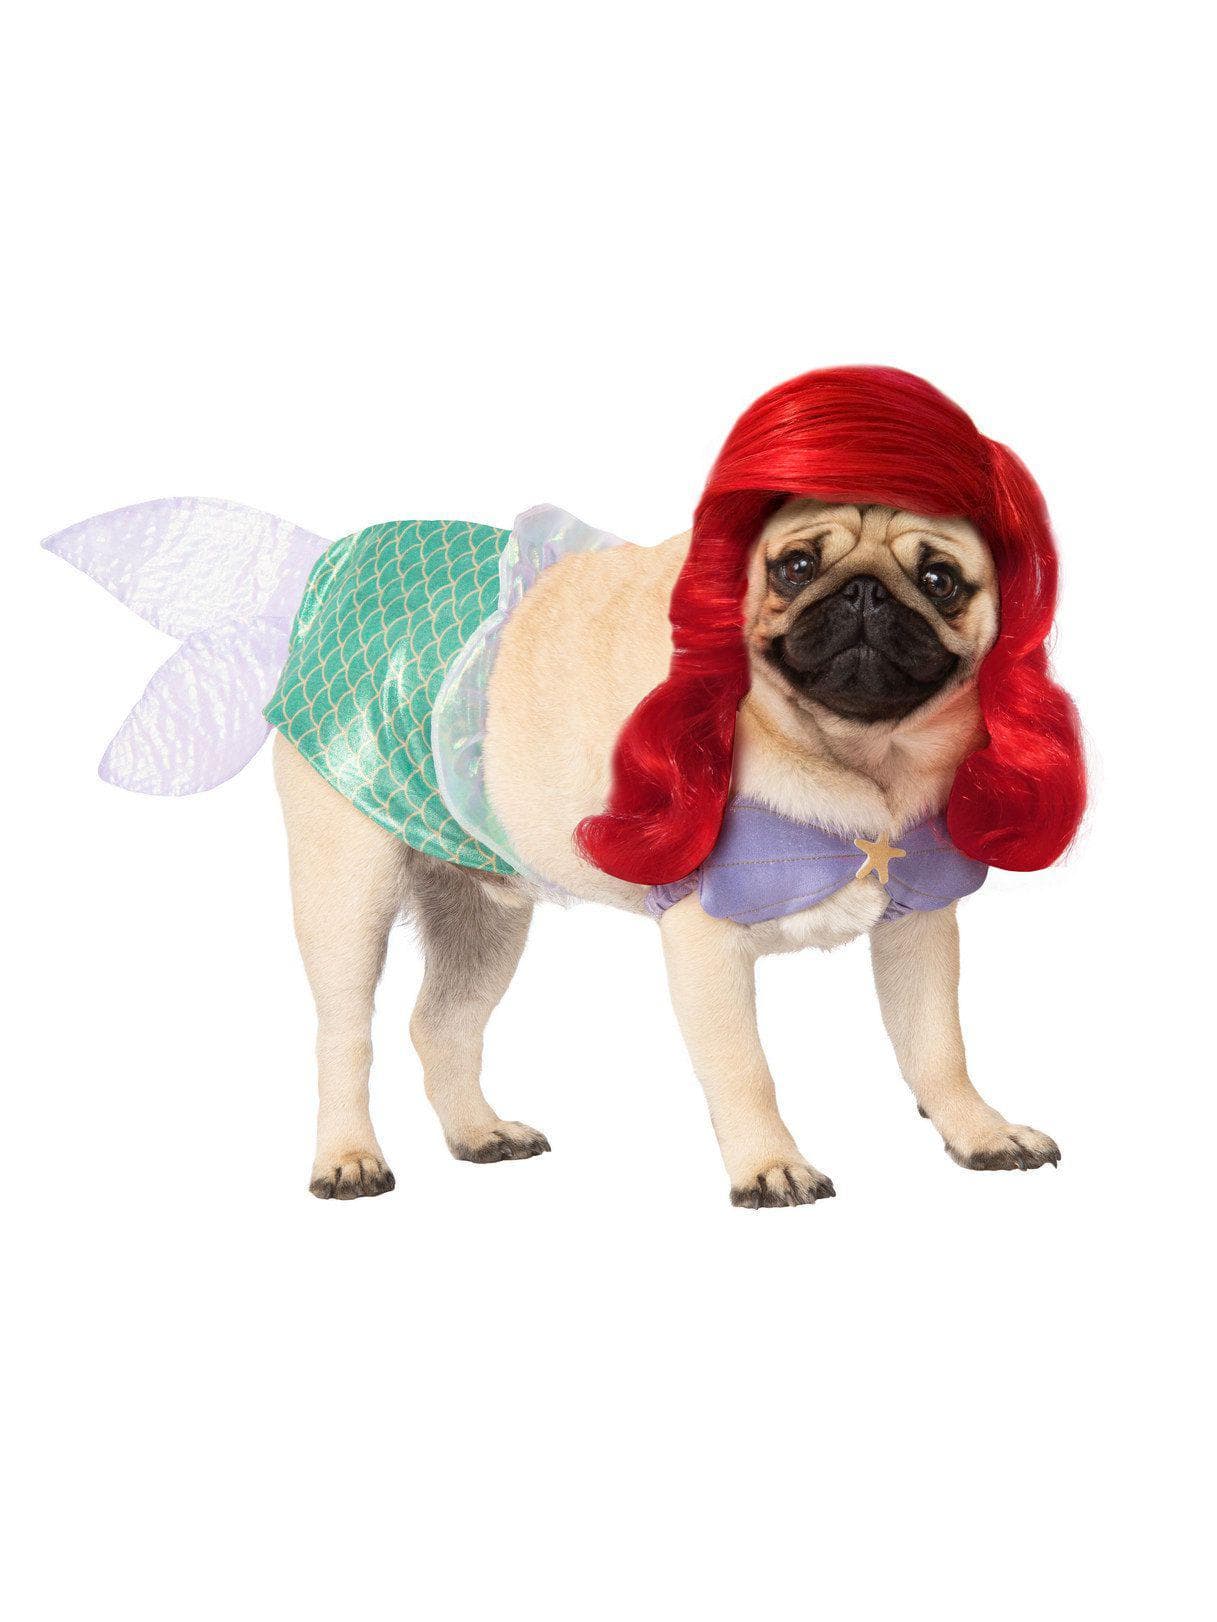 The Little Mermaid Ariel Pet Costume - costumes.com